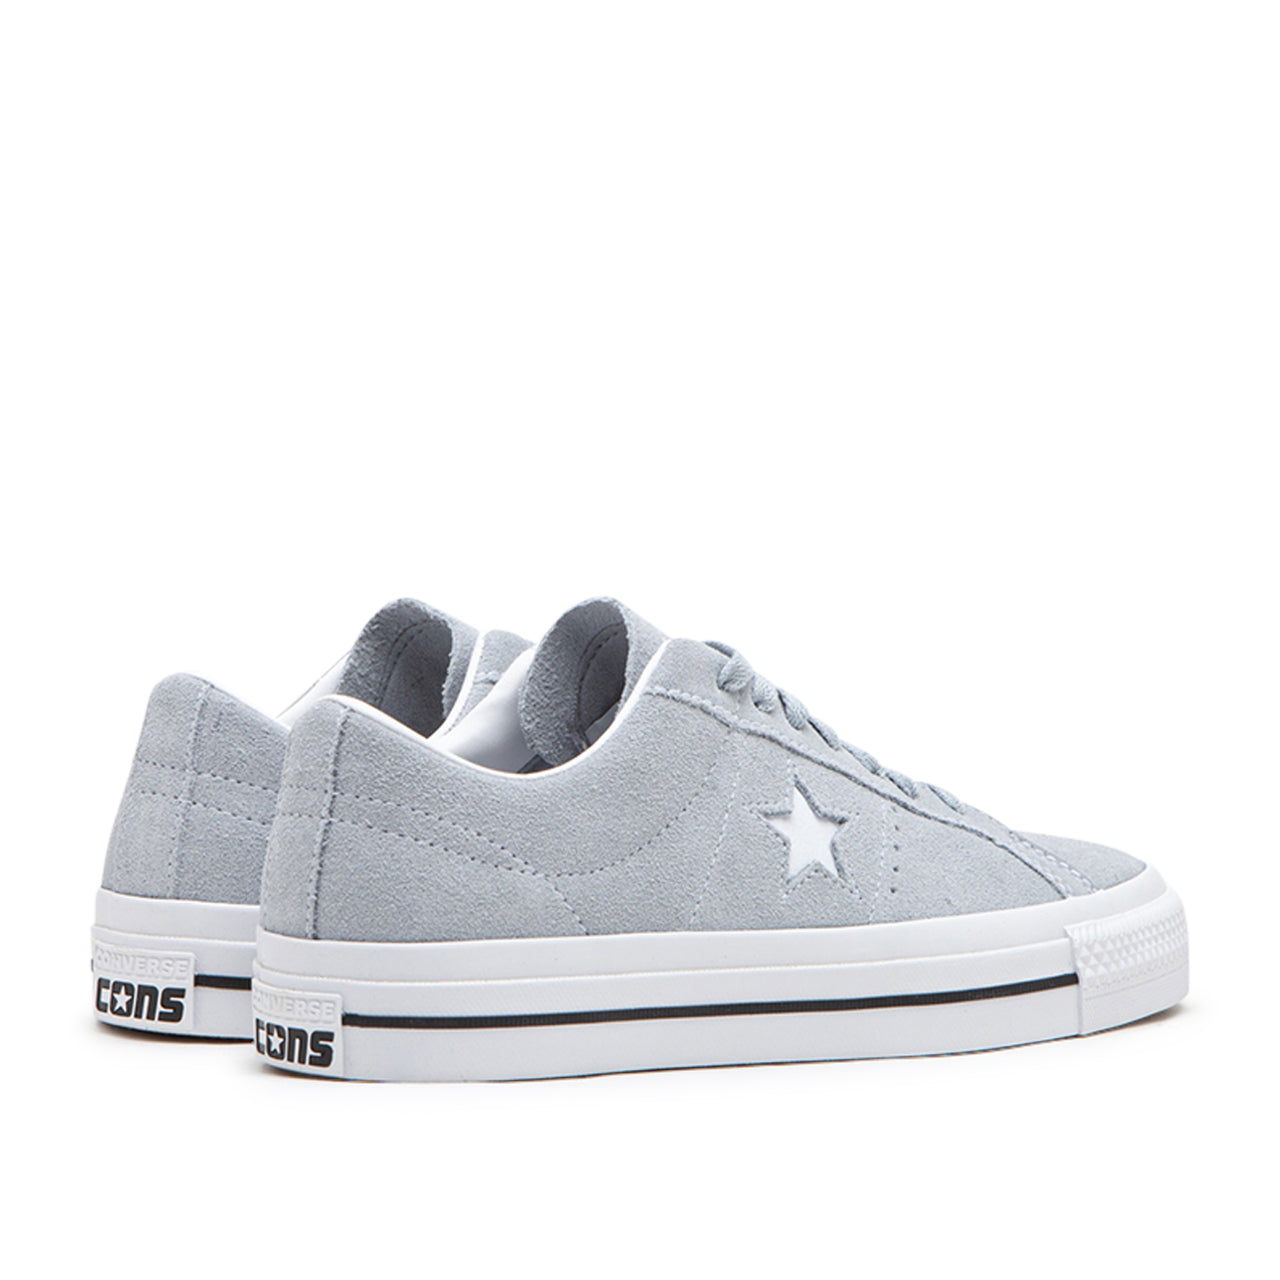 Converse Cons One Star Pro Fall Tone (Grau / Weiß)  - Cheap Sneakersbe Jordan Outlet